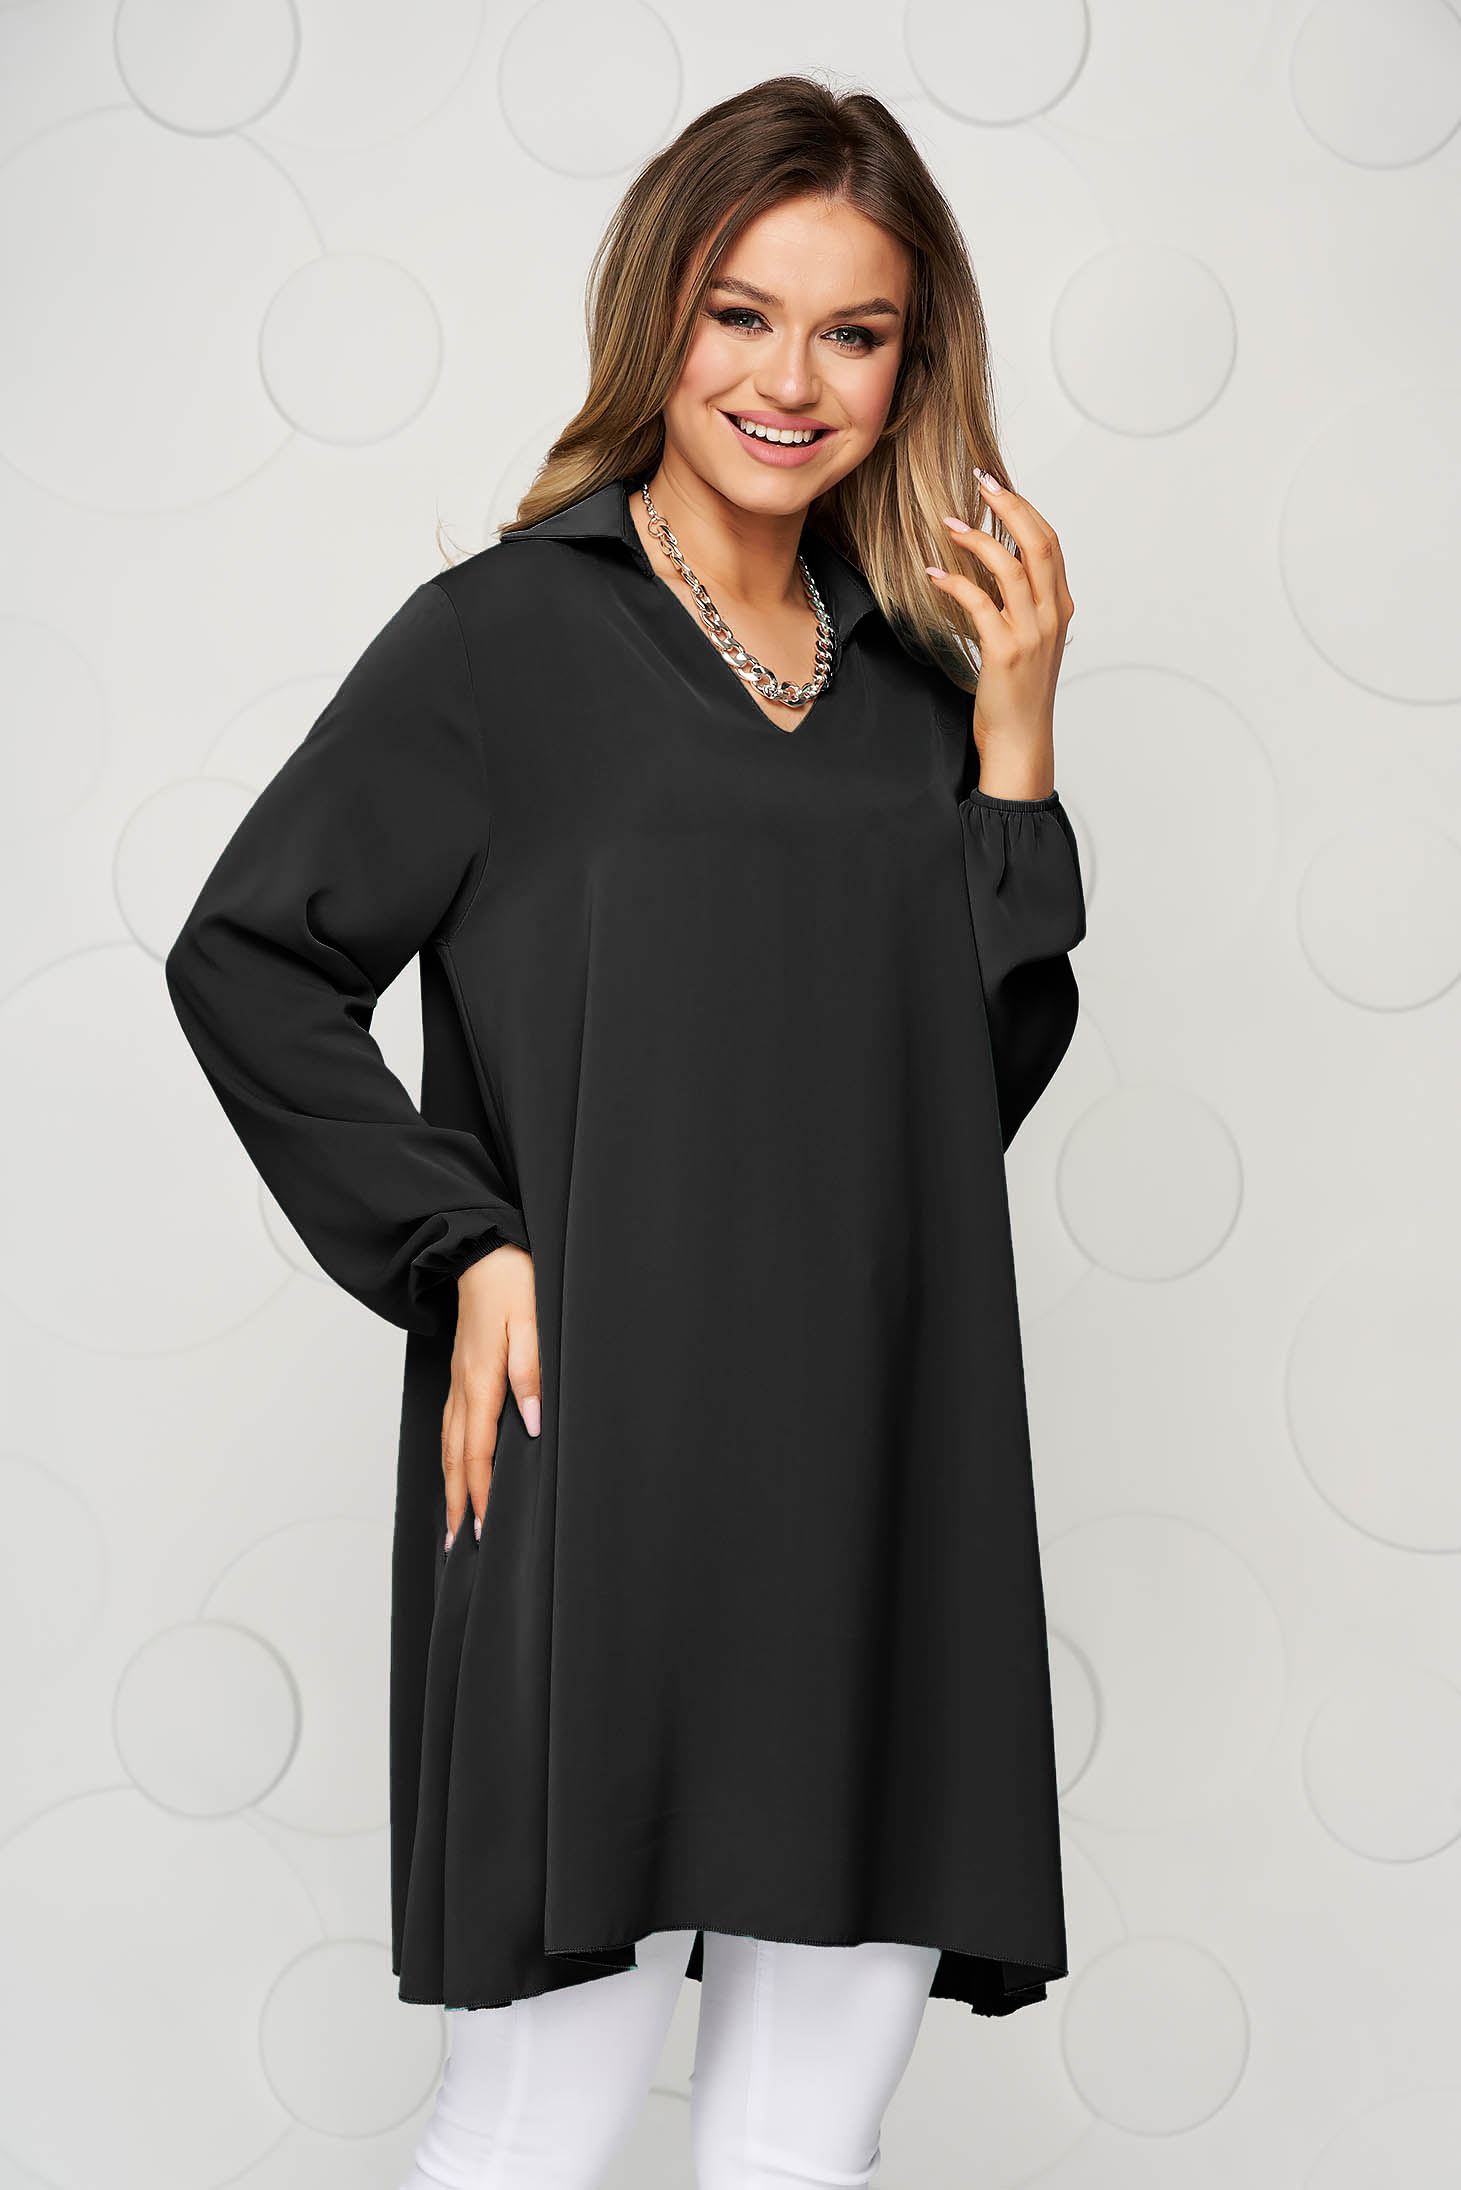 Bluza dama SunShine neagra cu croi larg din material vaporos si transparent cu maneca lunga